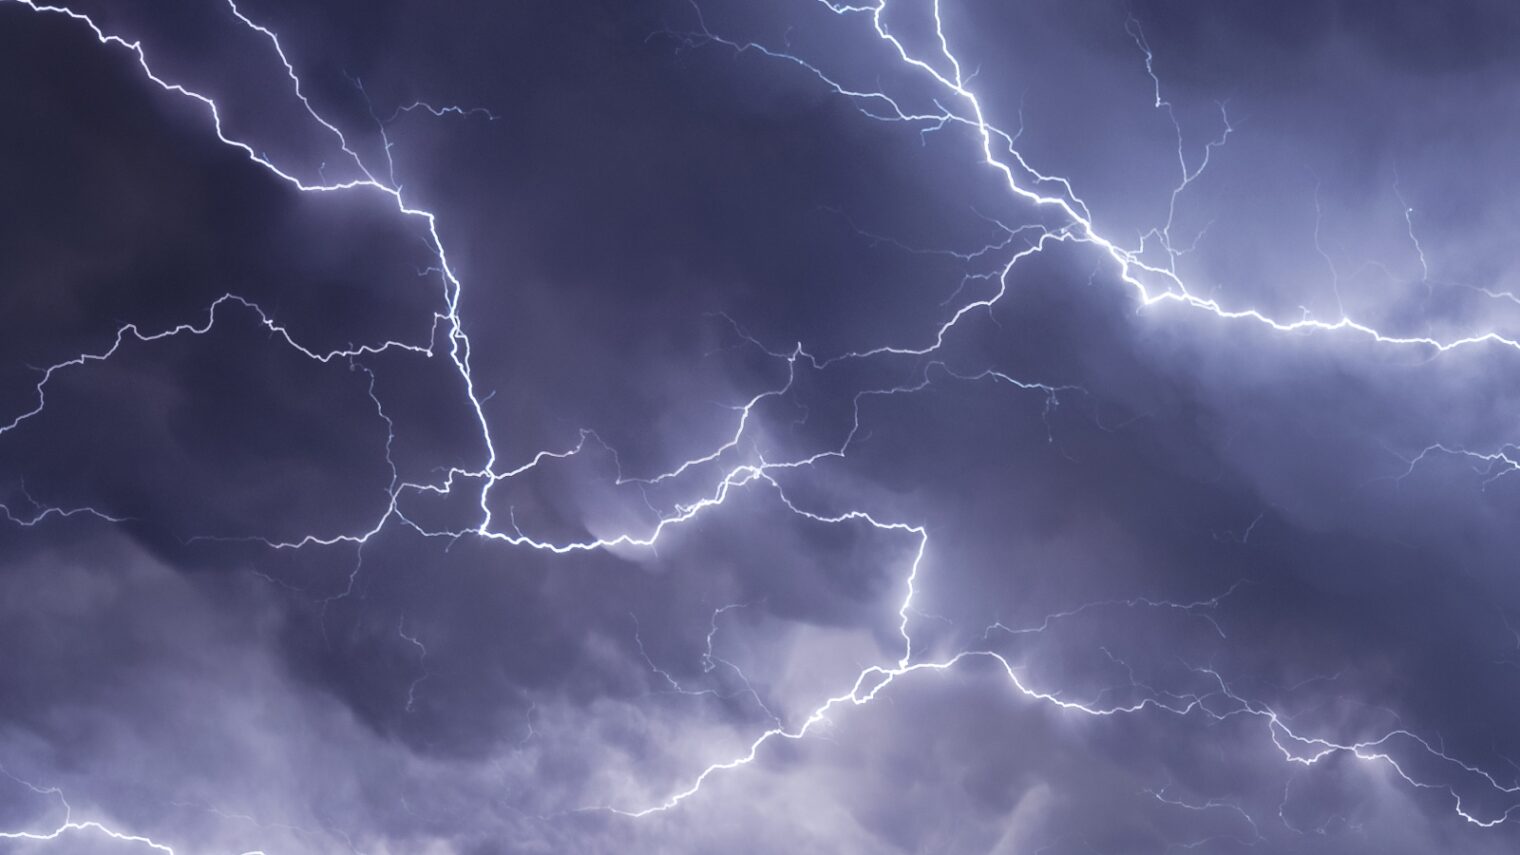 Lightning activity generates electromagnetic fields called Schumann Resonances. Photo by Menno van der Haven via shutterstock.com